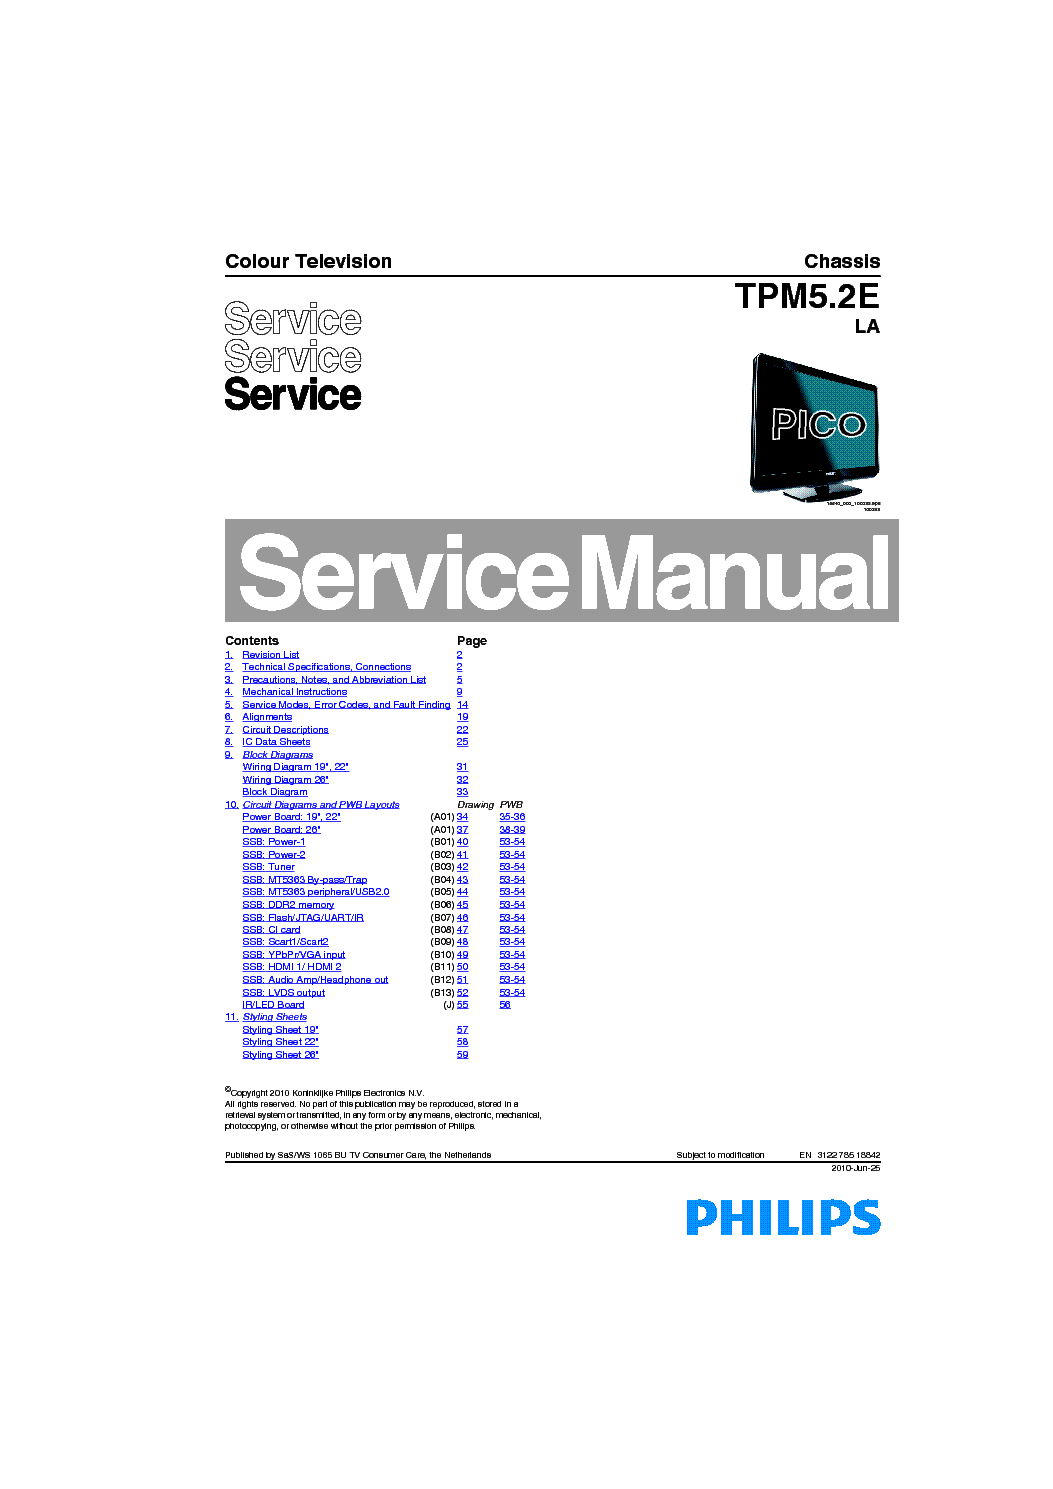 PHILIPS CHASSIS TPM5.2E-LA service manual (1st page)